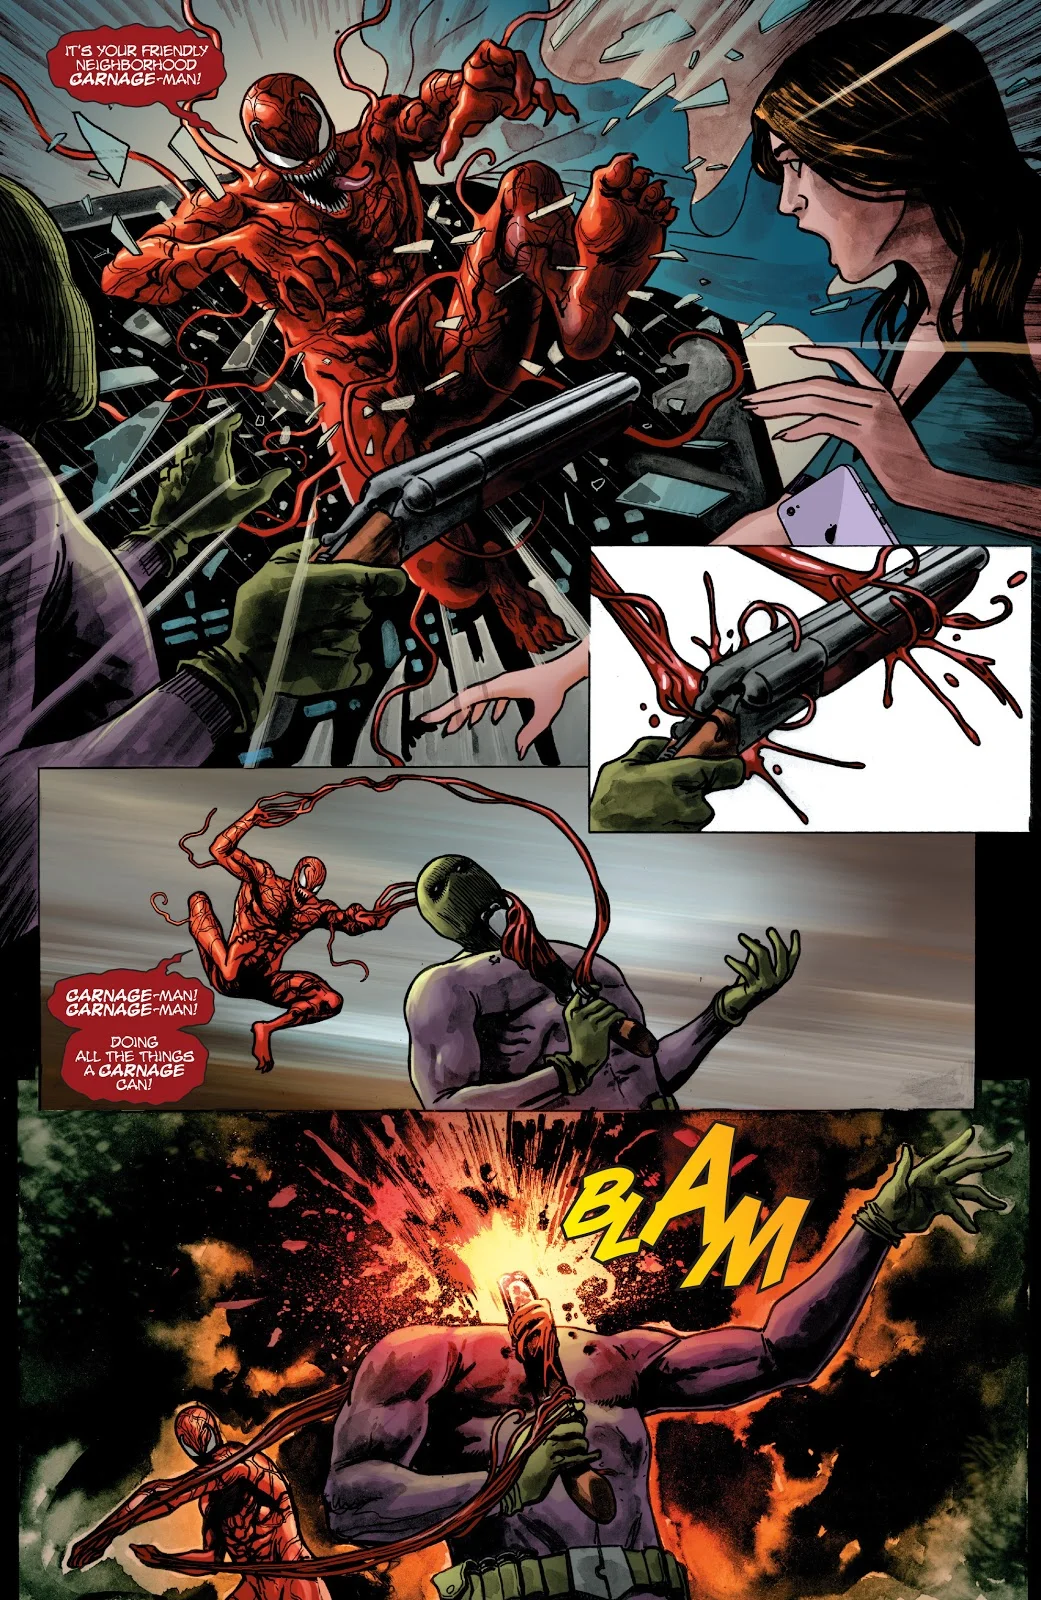 История Карнажа — самого безумного врага Человека-паука - фото 7